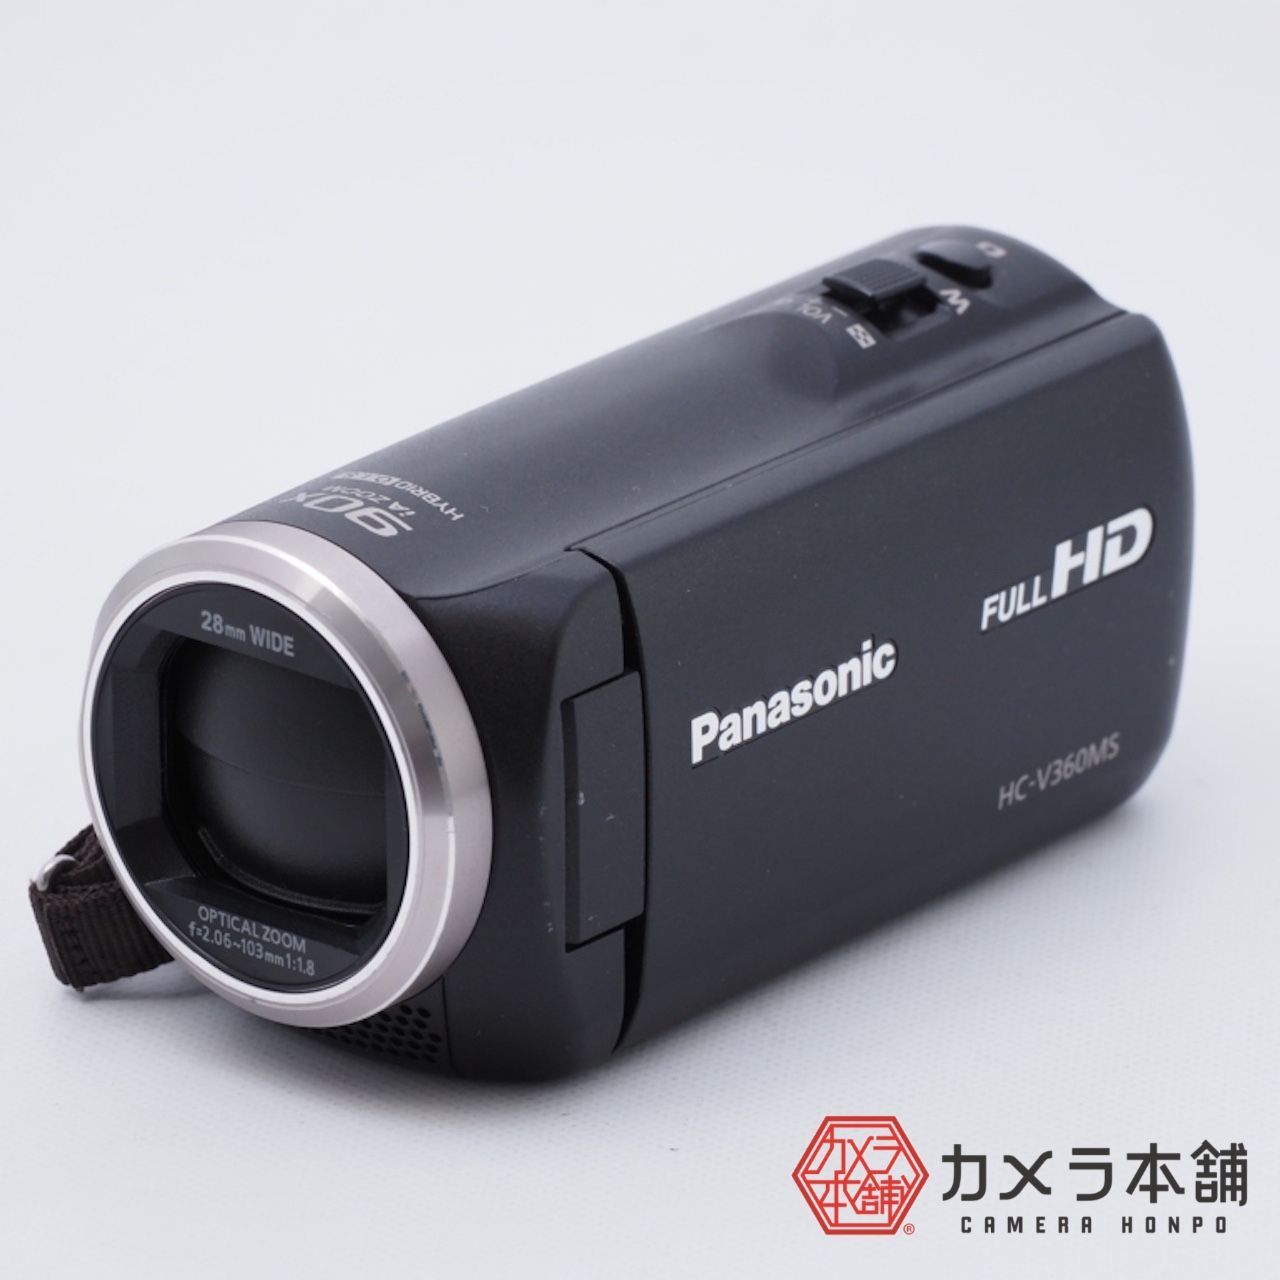 Panasonic HDビデオカメラ HC-V360MS 16GB 倍率90倍 - カメラ本舗